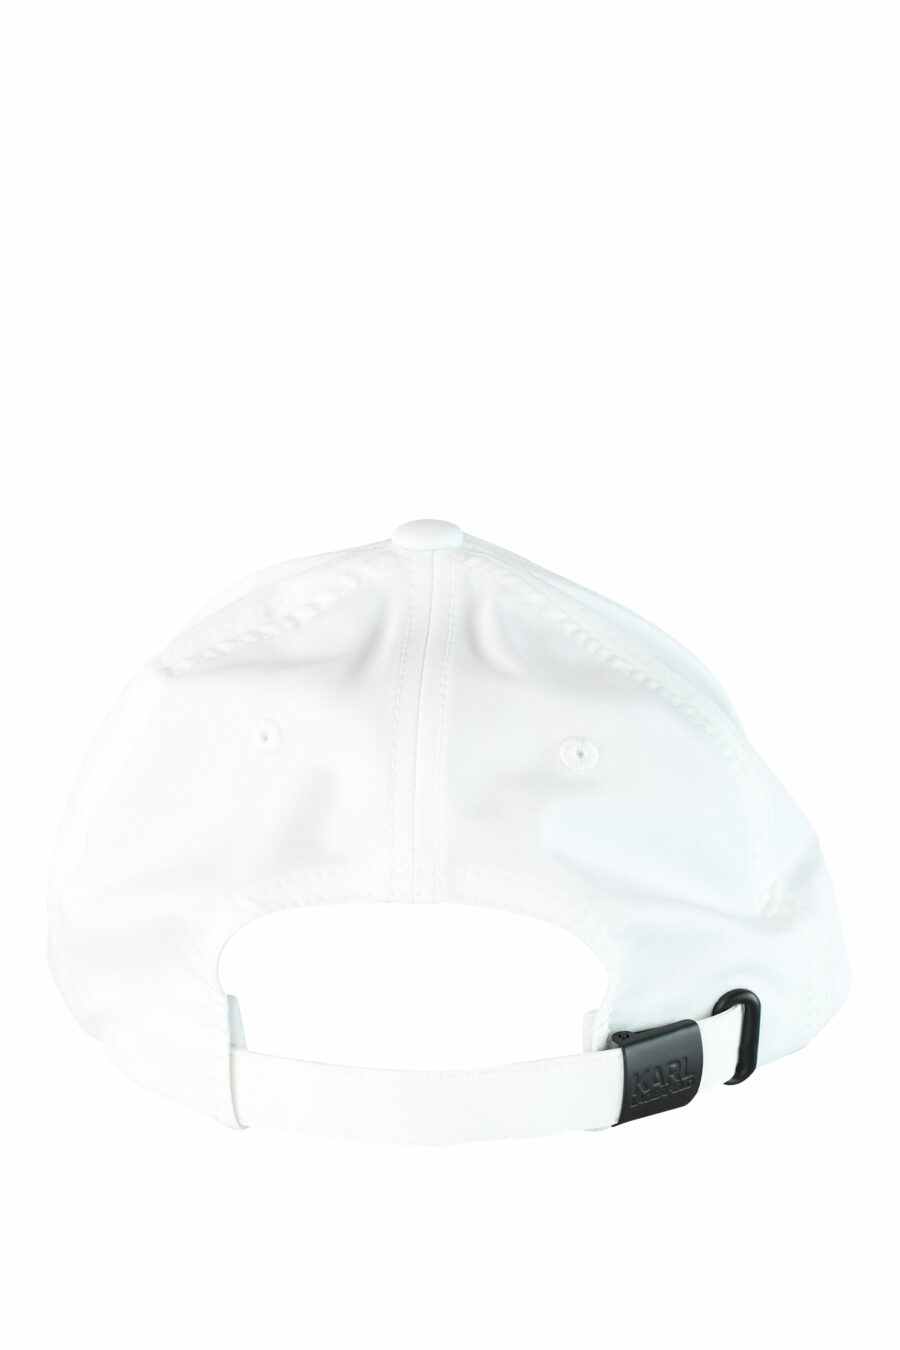 Gorra blanca con logo etiqueta - IMG 1531